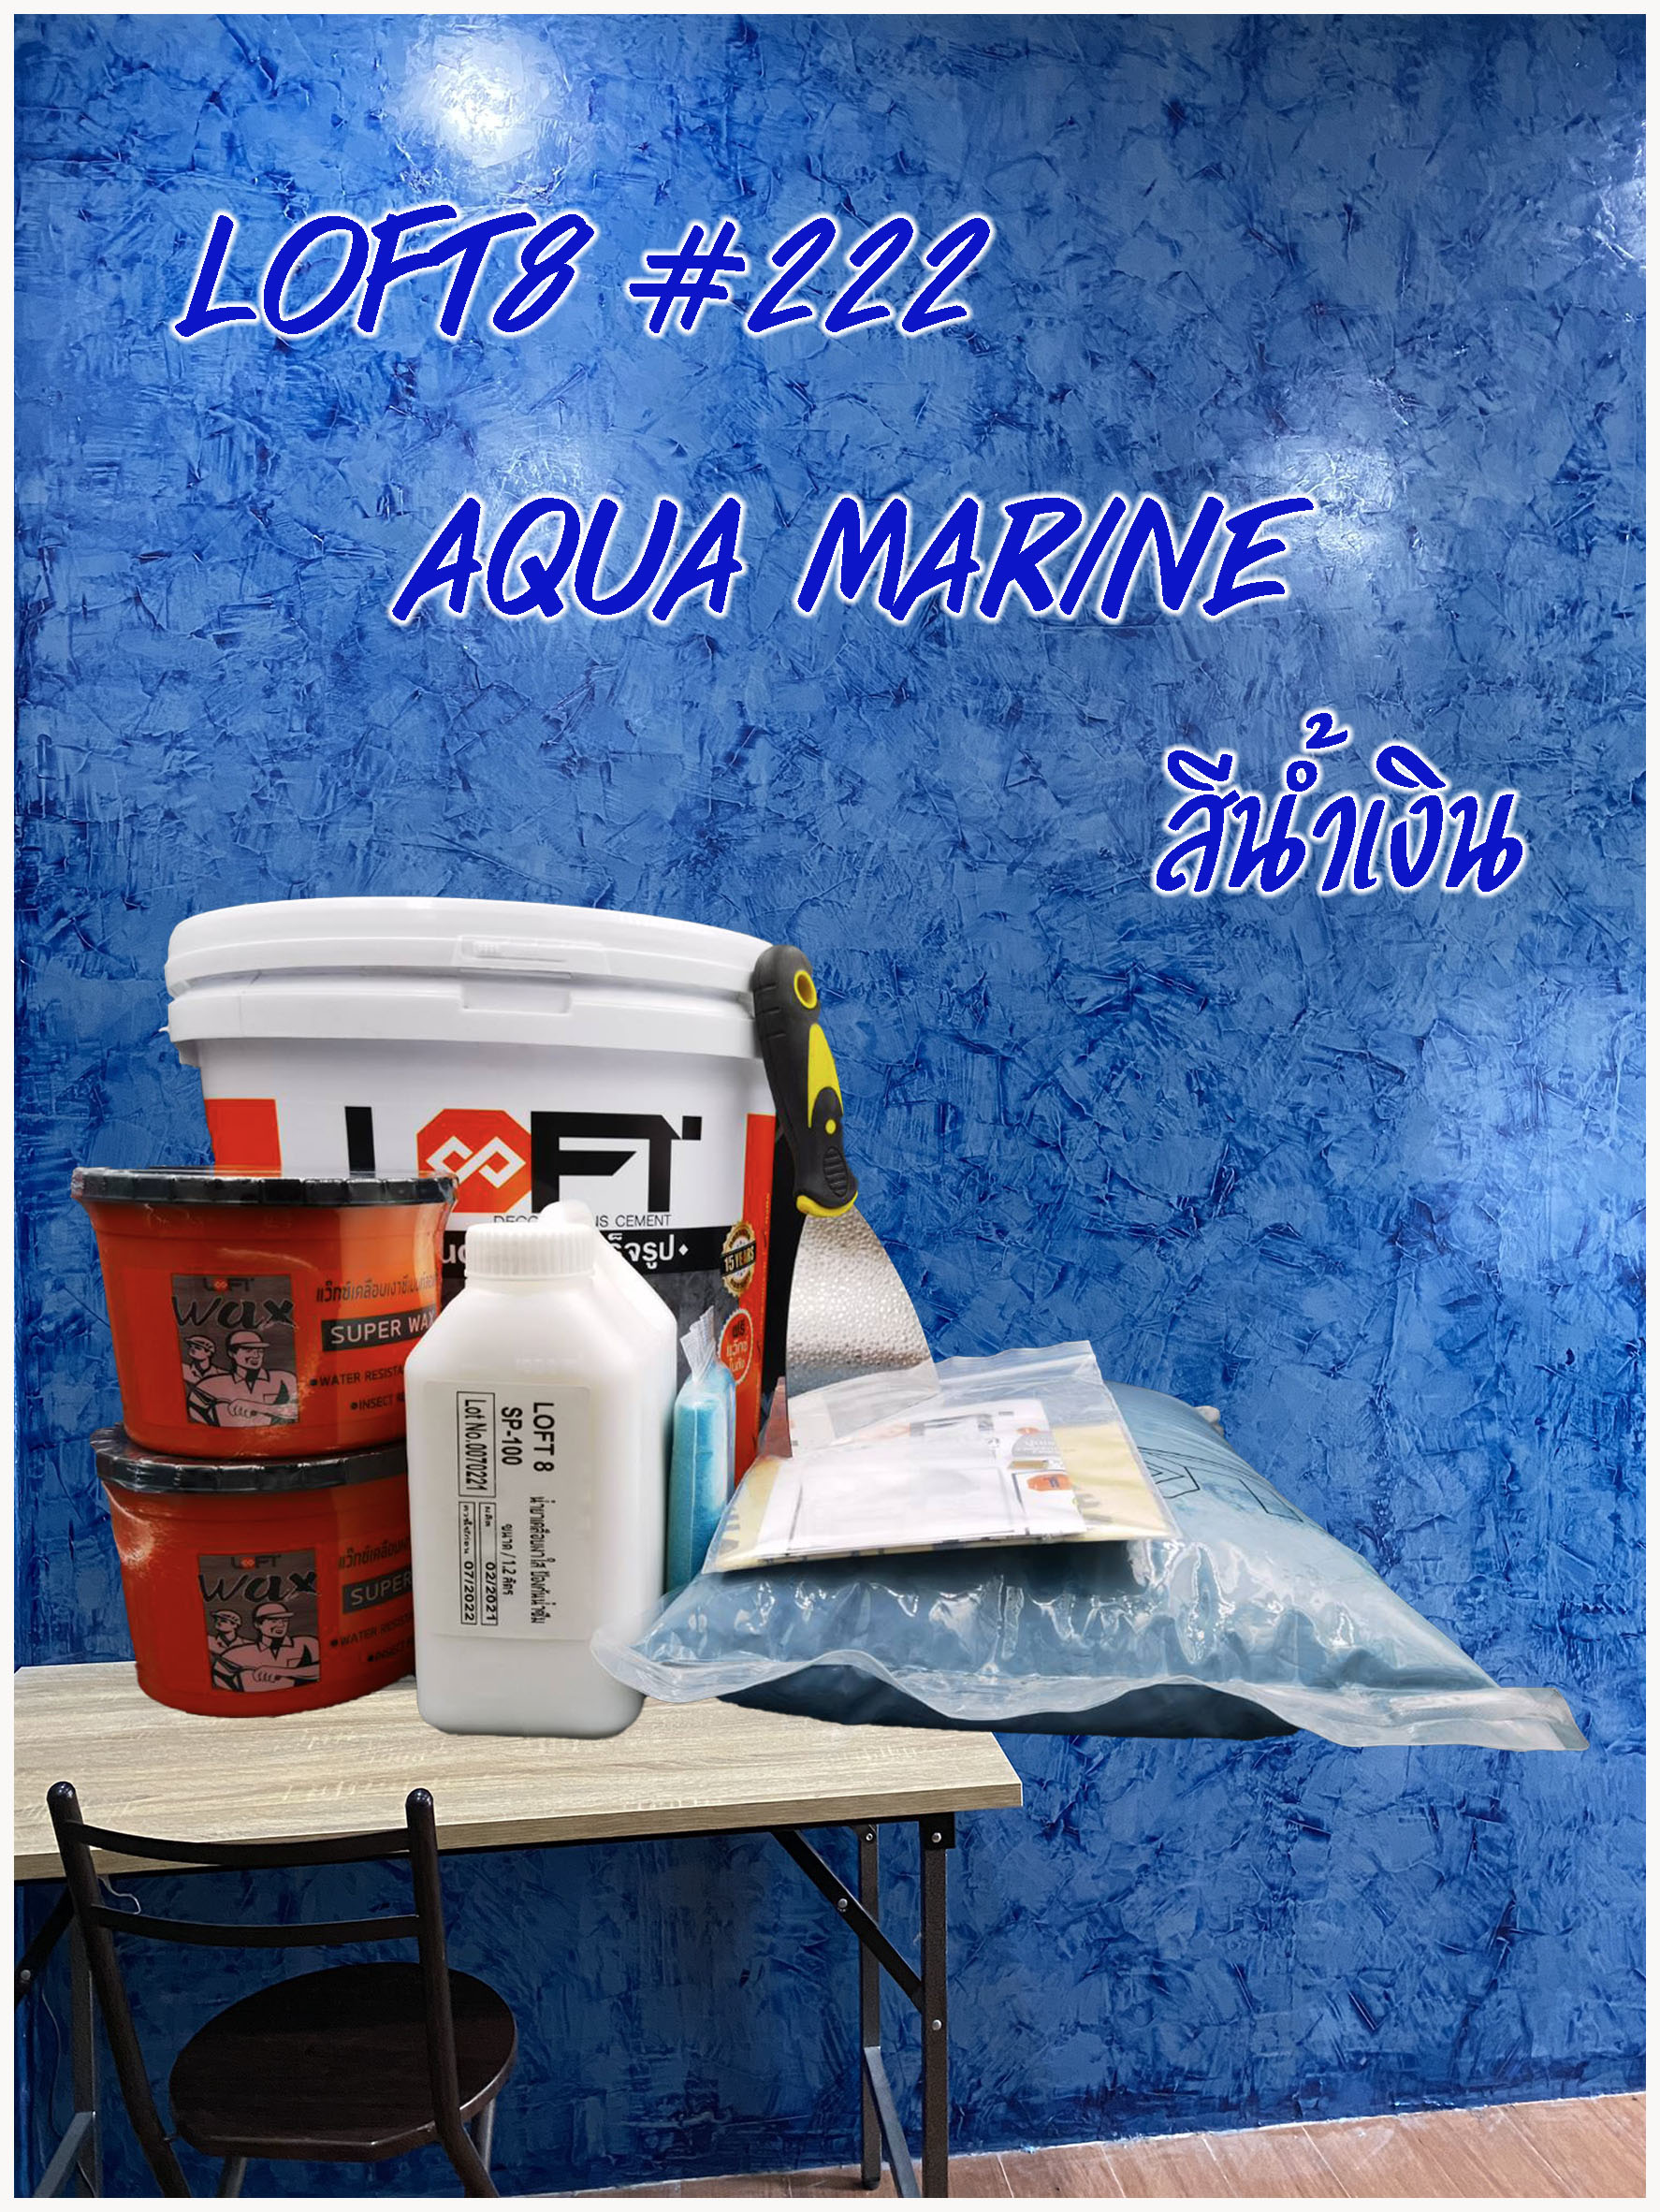 LOFT8 ซีเมนต์ขัดมันสำเร็จรูปสไตล์ลอฟท์ 13 KG สีน้ำเงิน เบอร์ 222 / Set Loft 8 #222 Aqua Marine